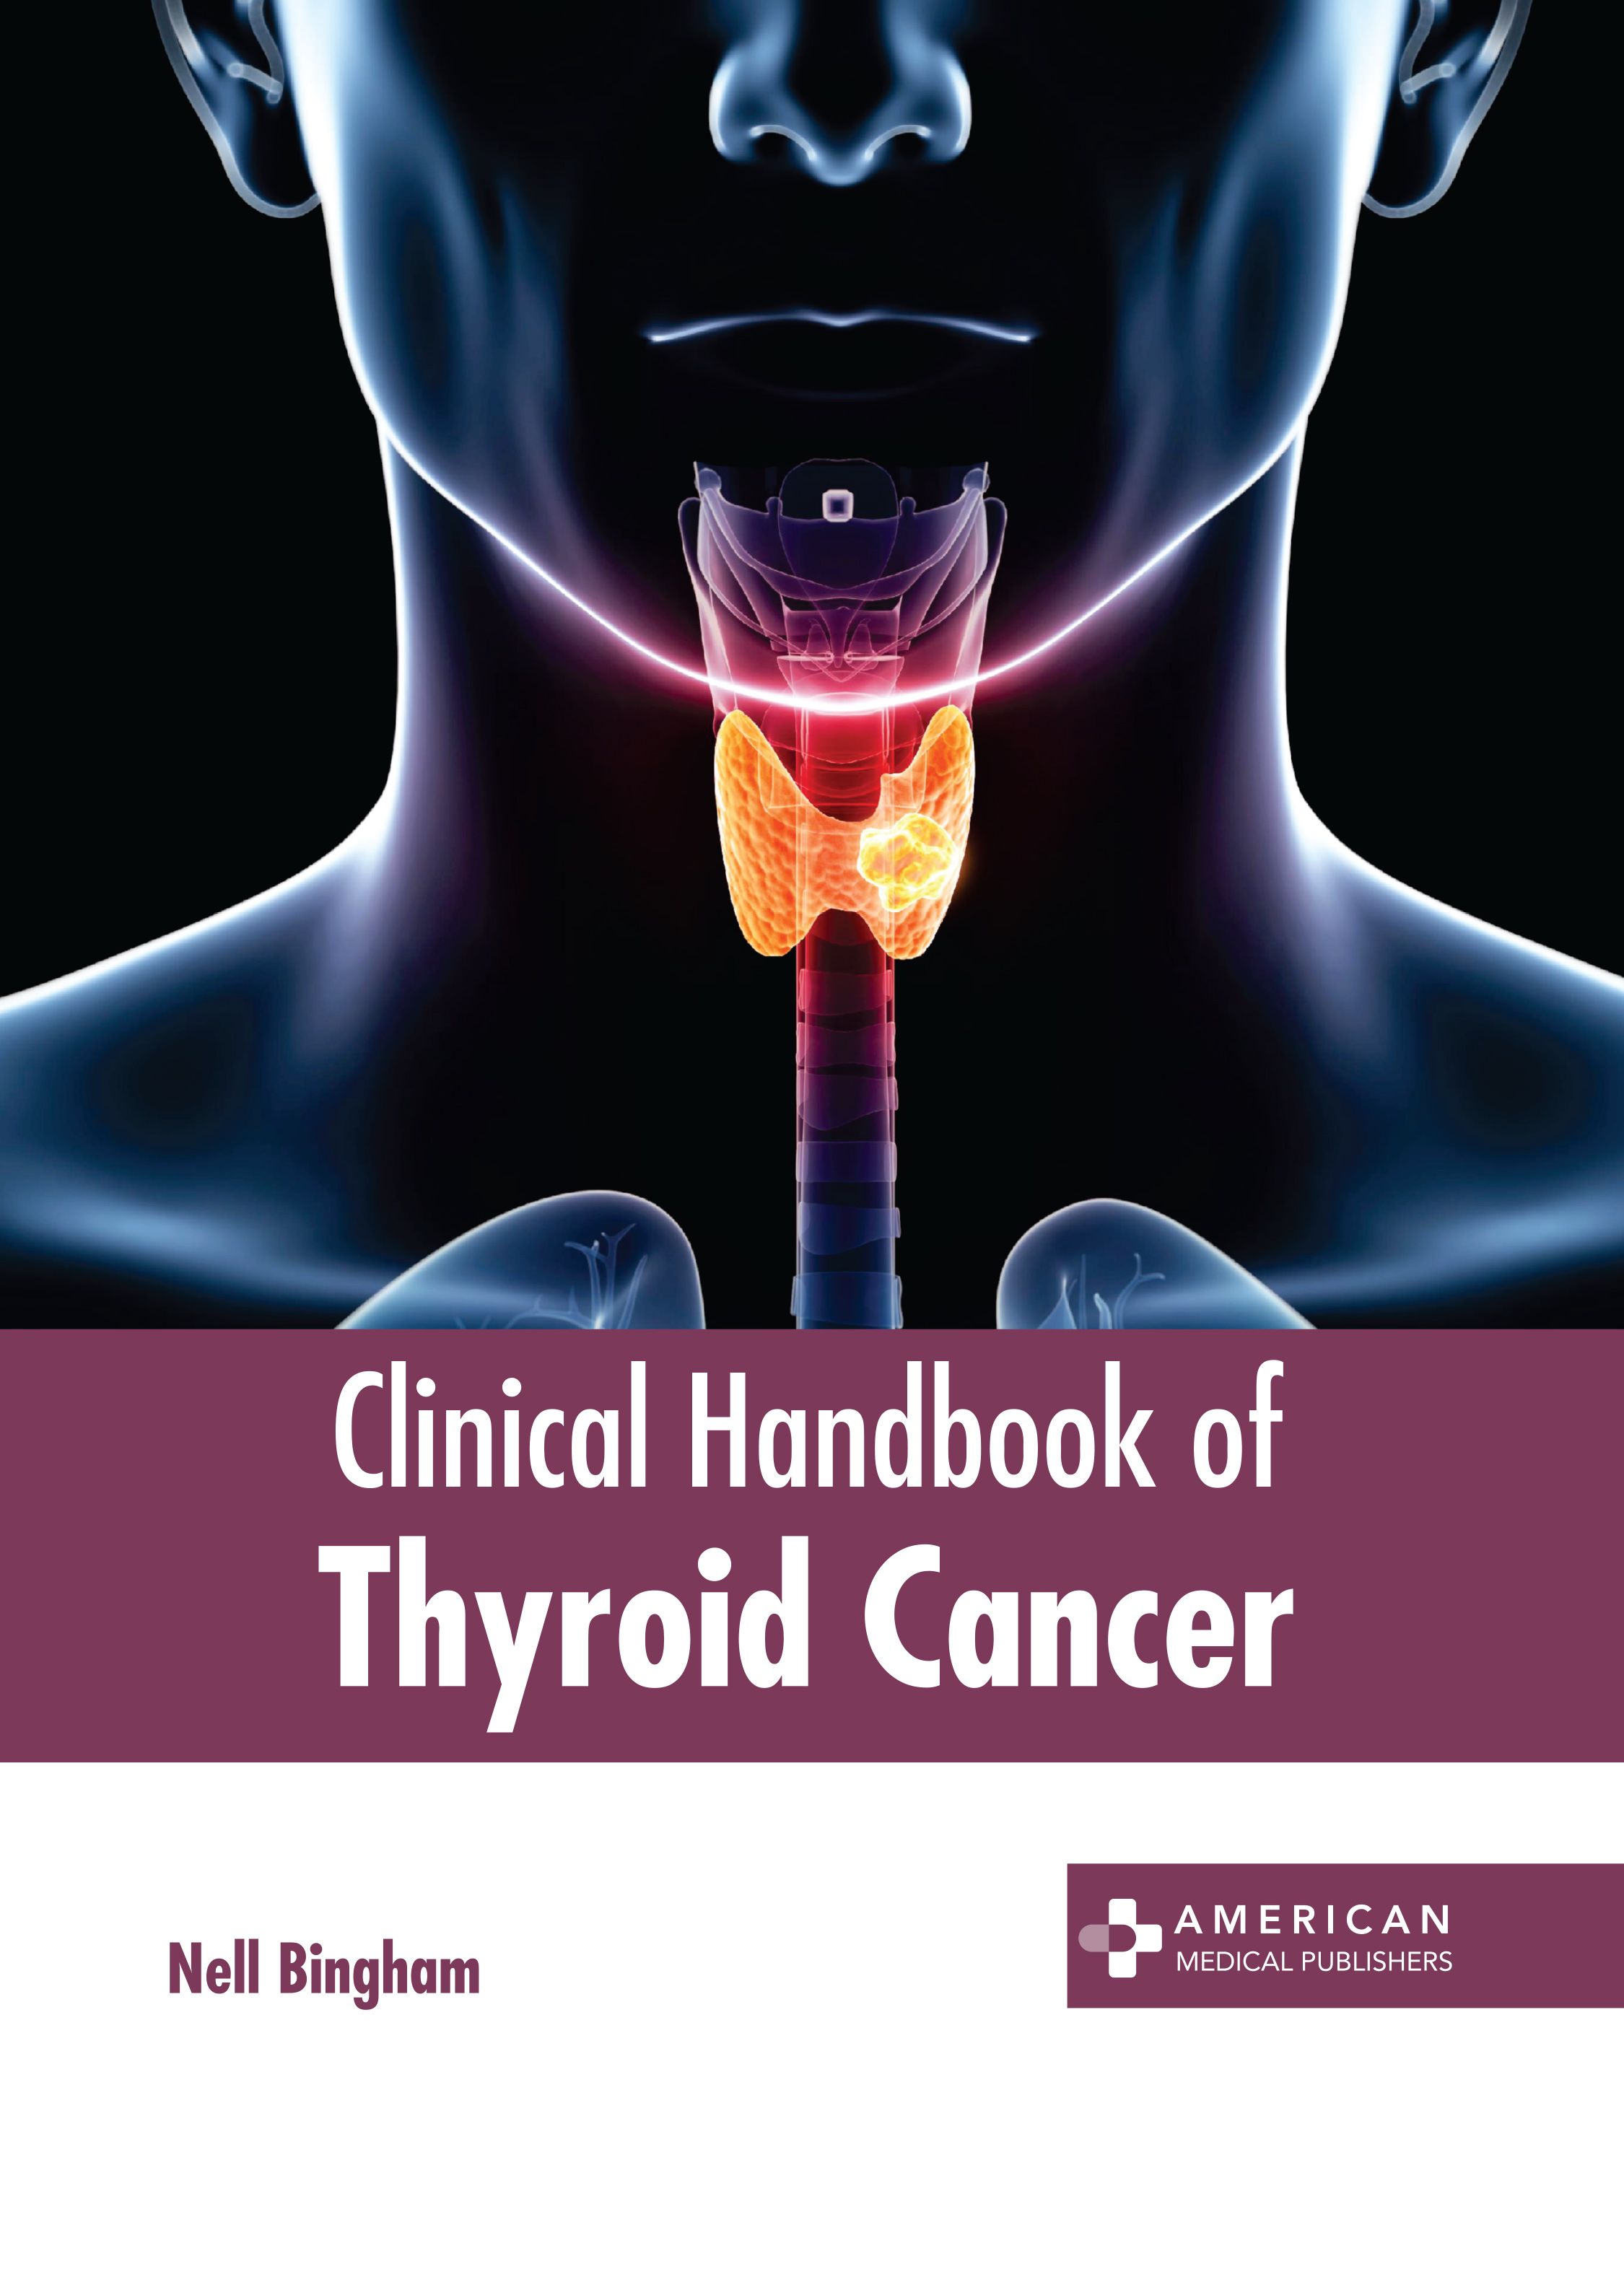 CLINICAL HANDBOOK OF THYROID CANCER